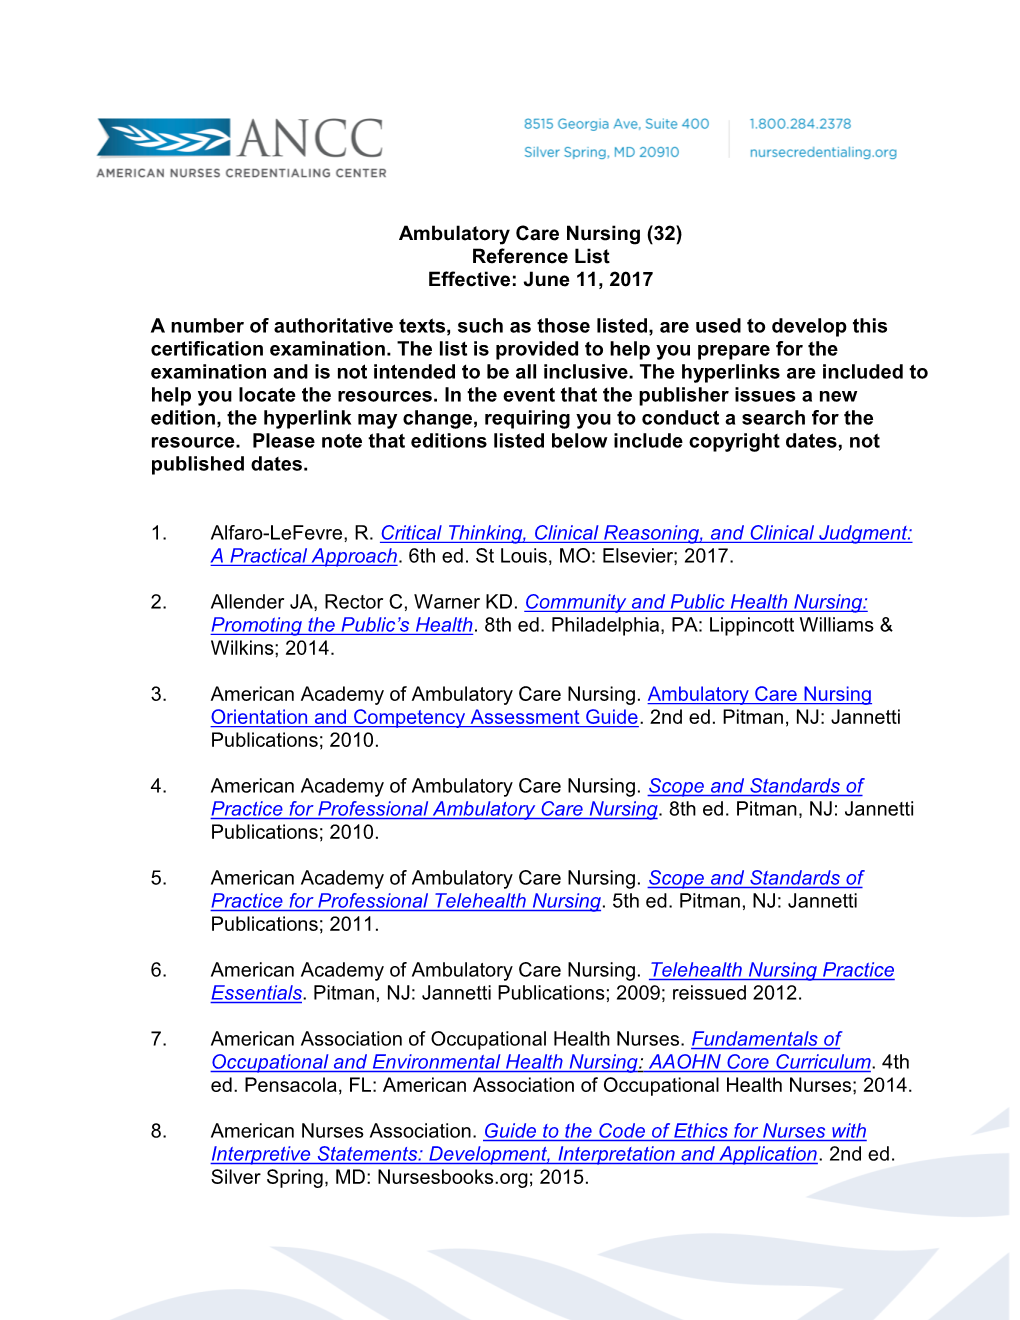 Ambulatory Care Nursing Reference List